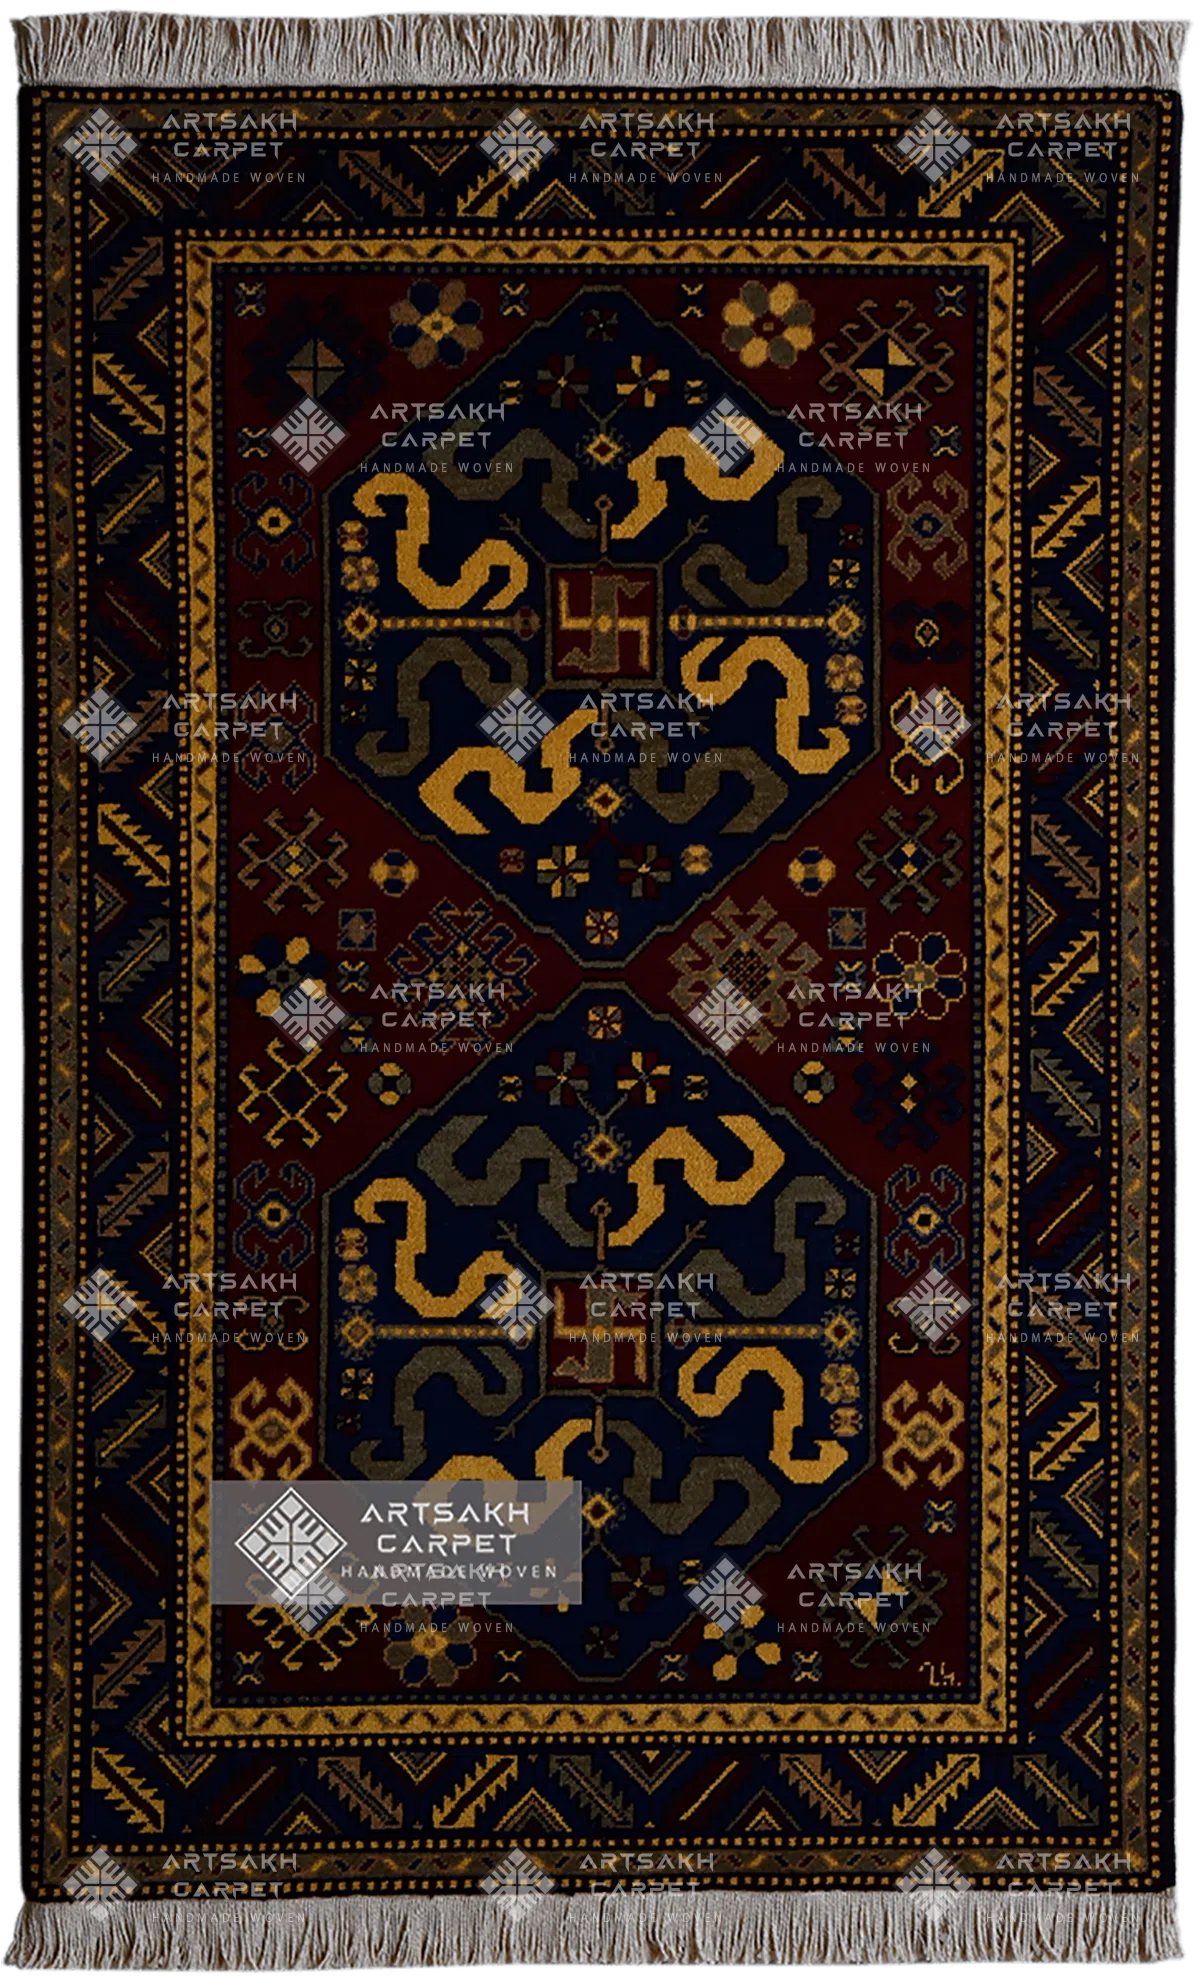 Armenian traditional carpet Dragon Carpet Khndzoresk